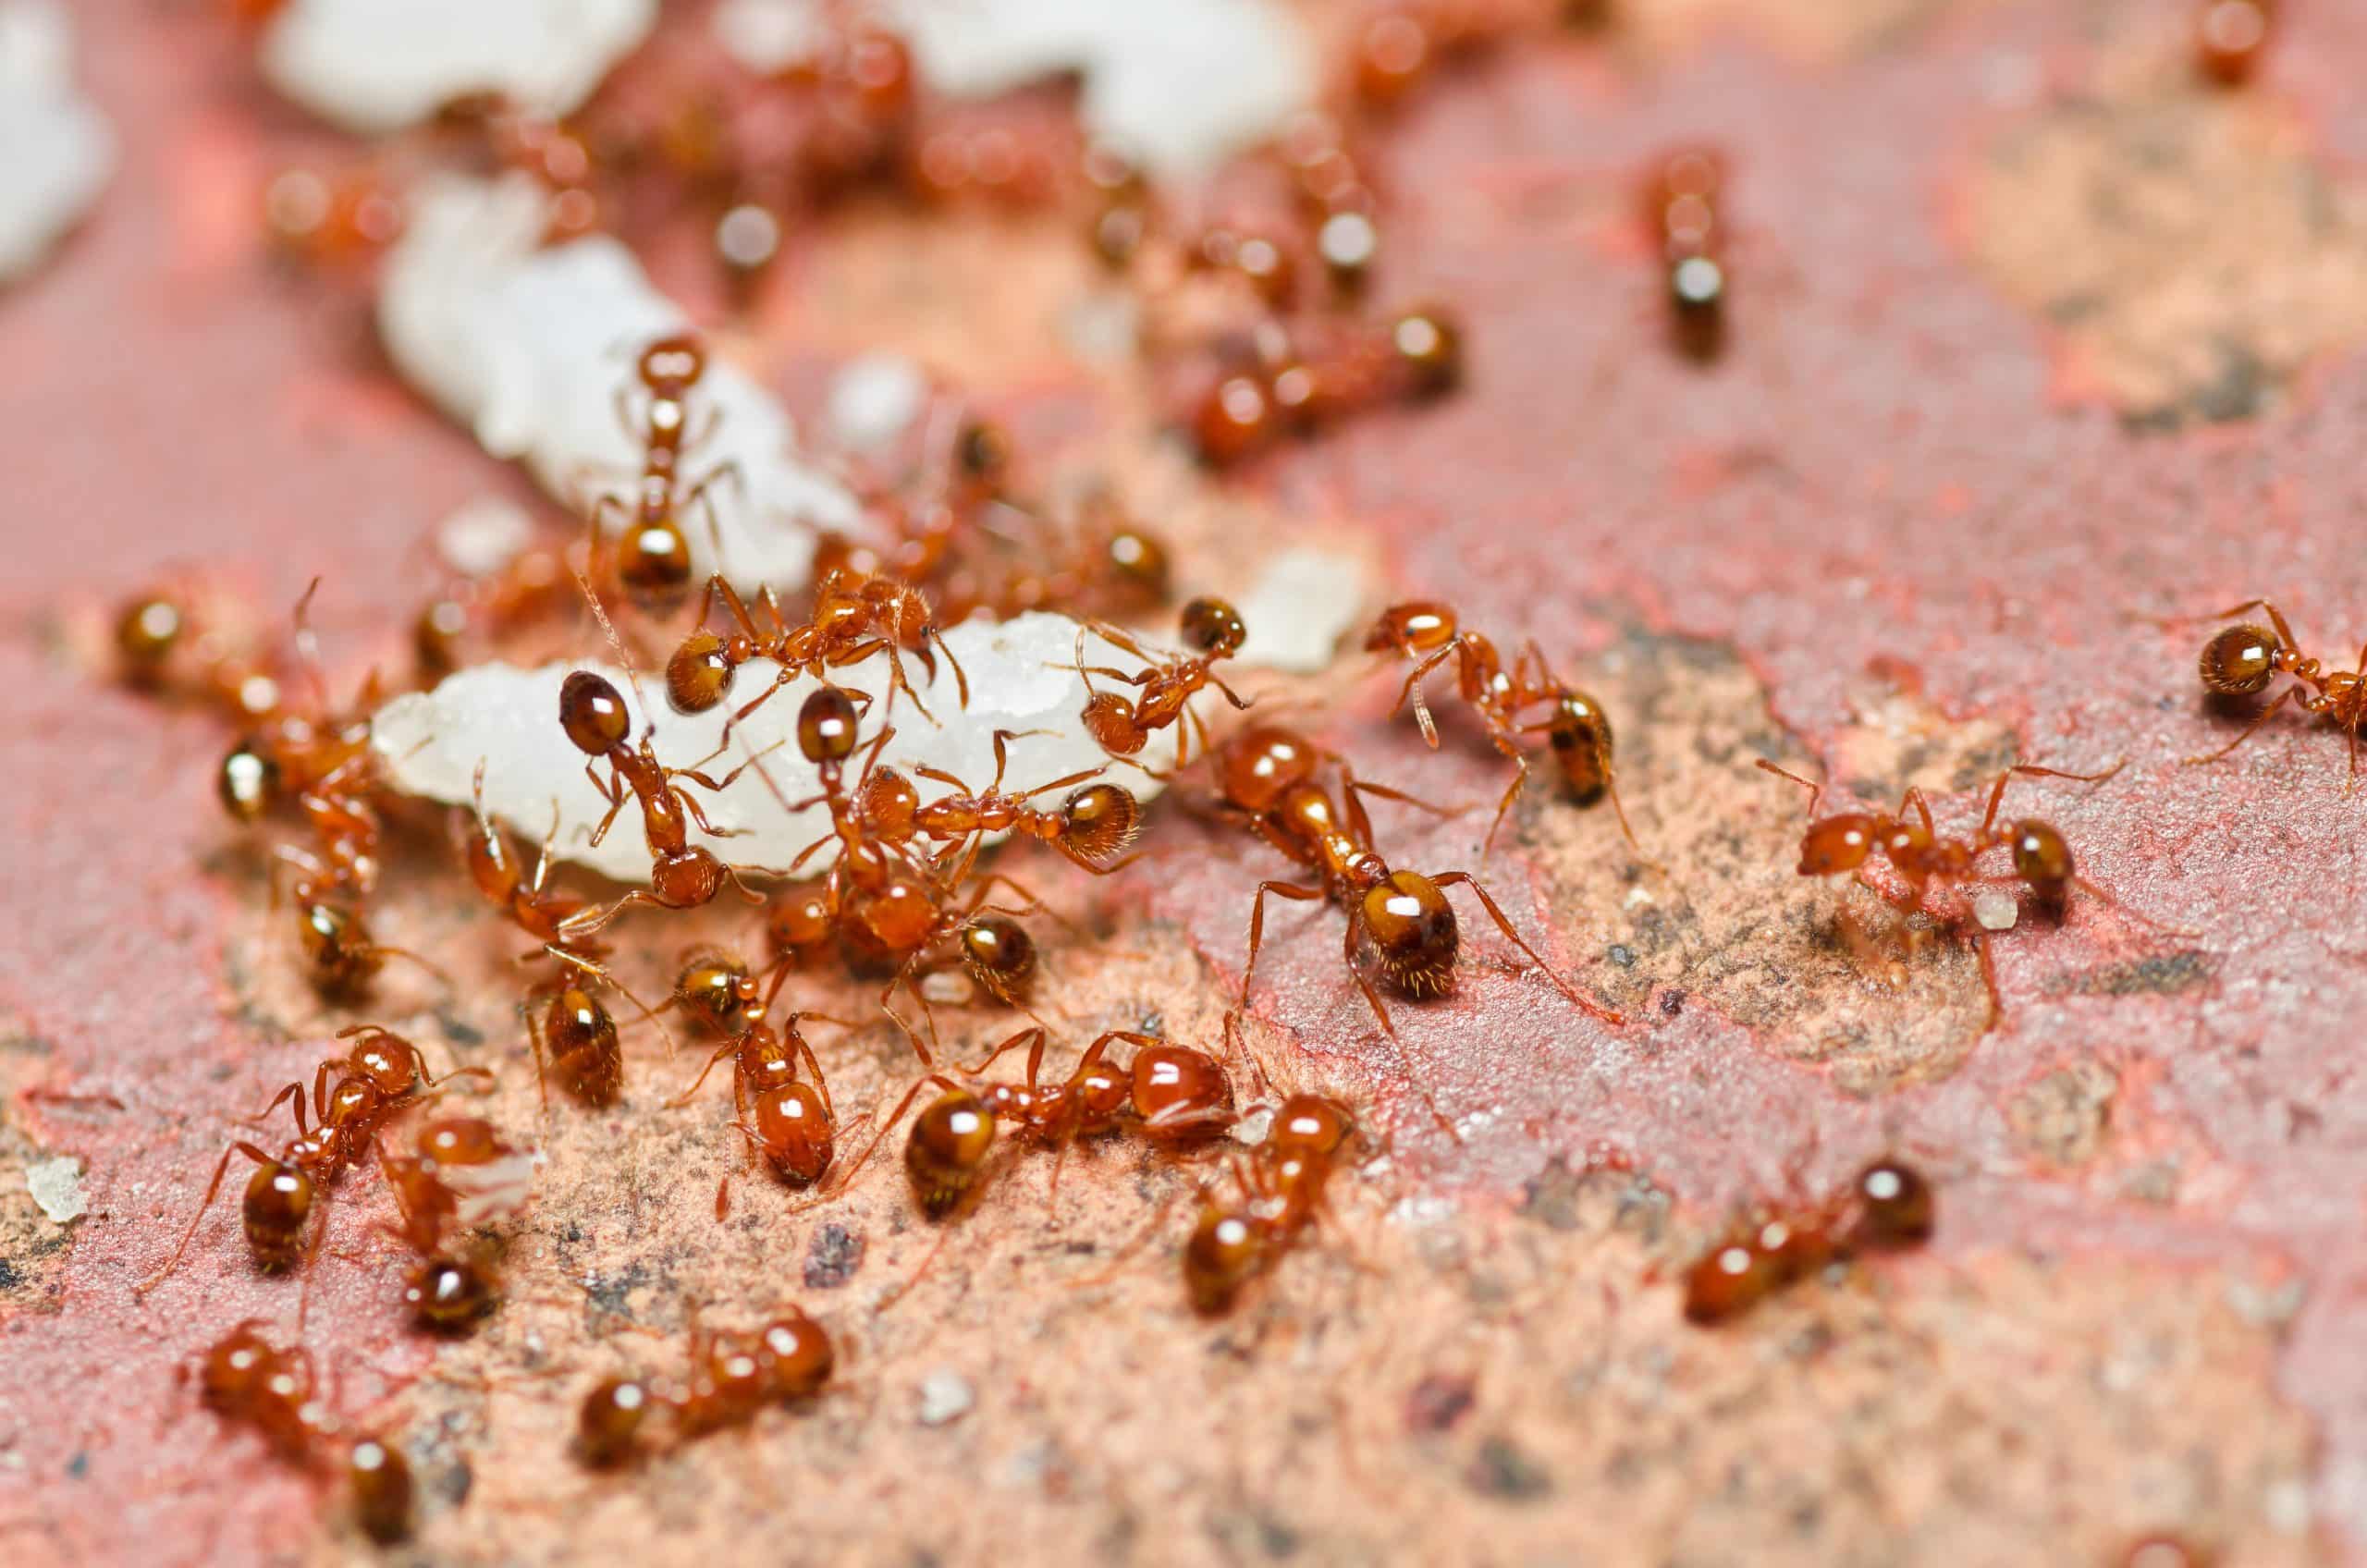 Ants in Arizona